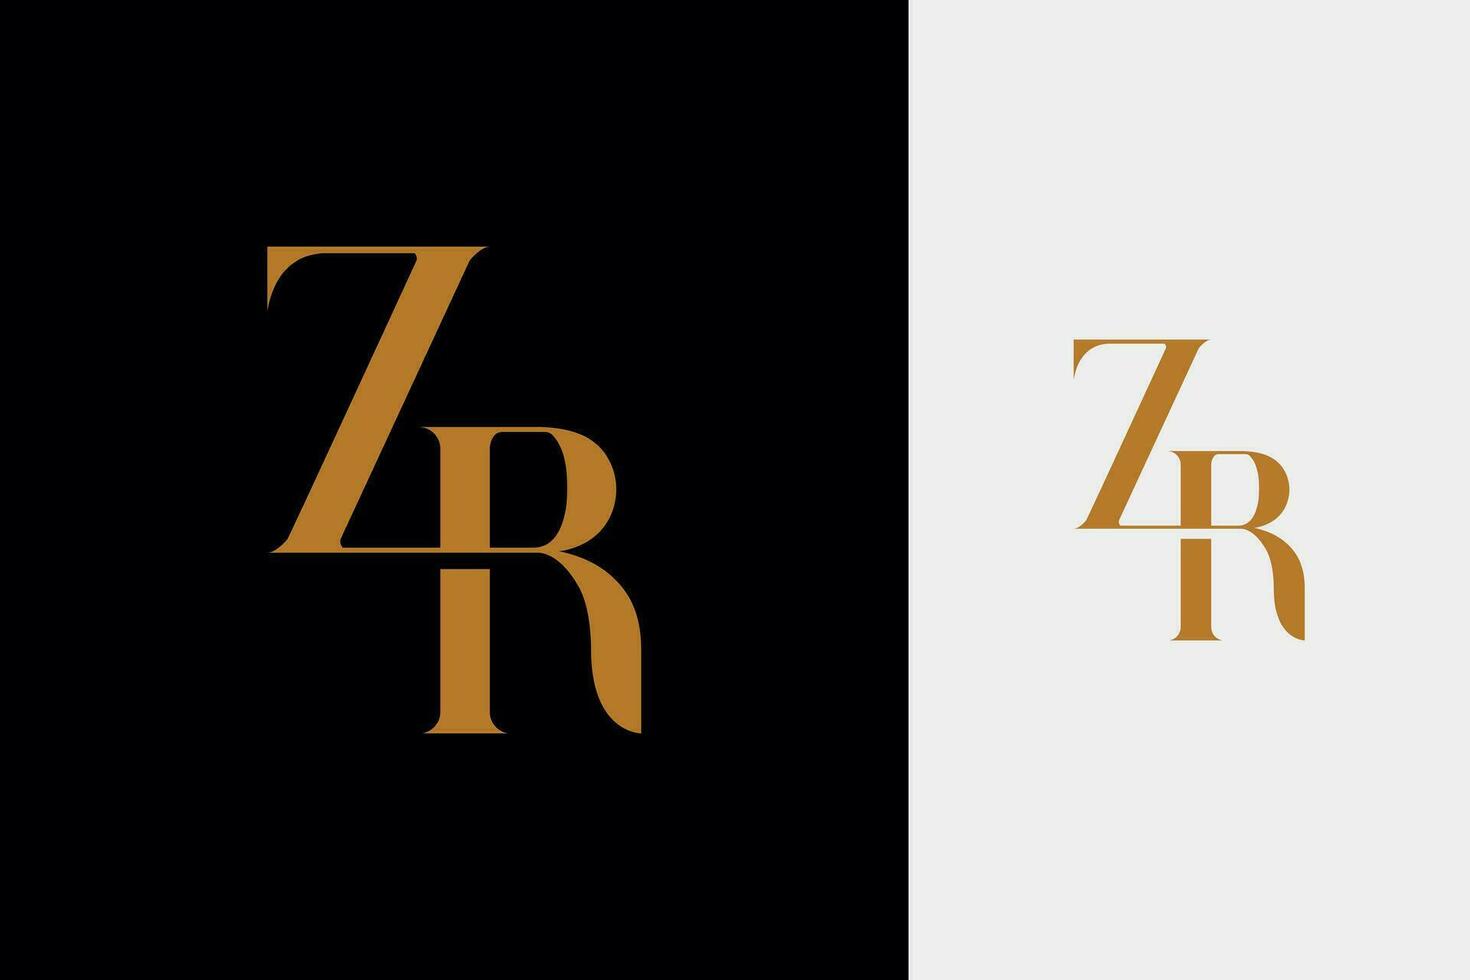 elegant enkel minimal lyx serif font alfabet brev z kombinerad med brev r logotyp design vektor